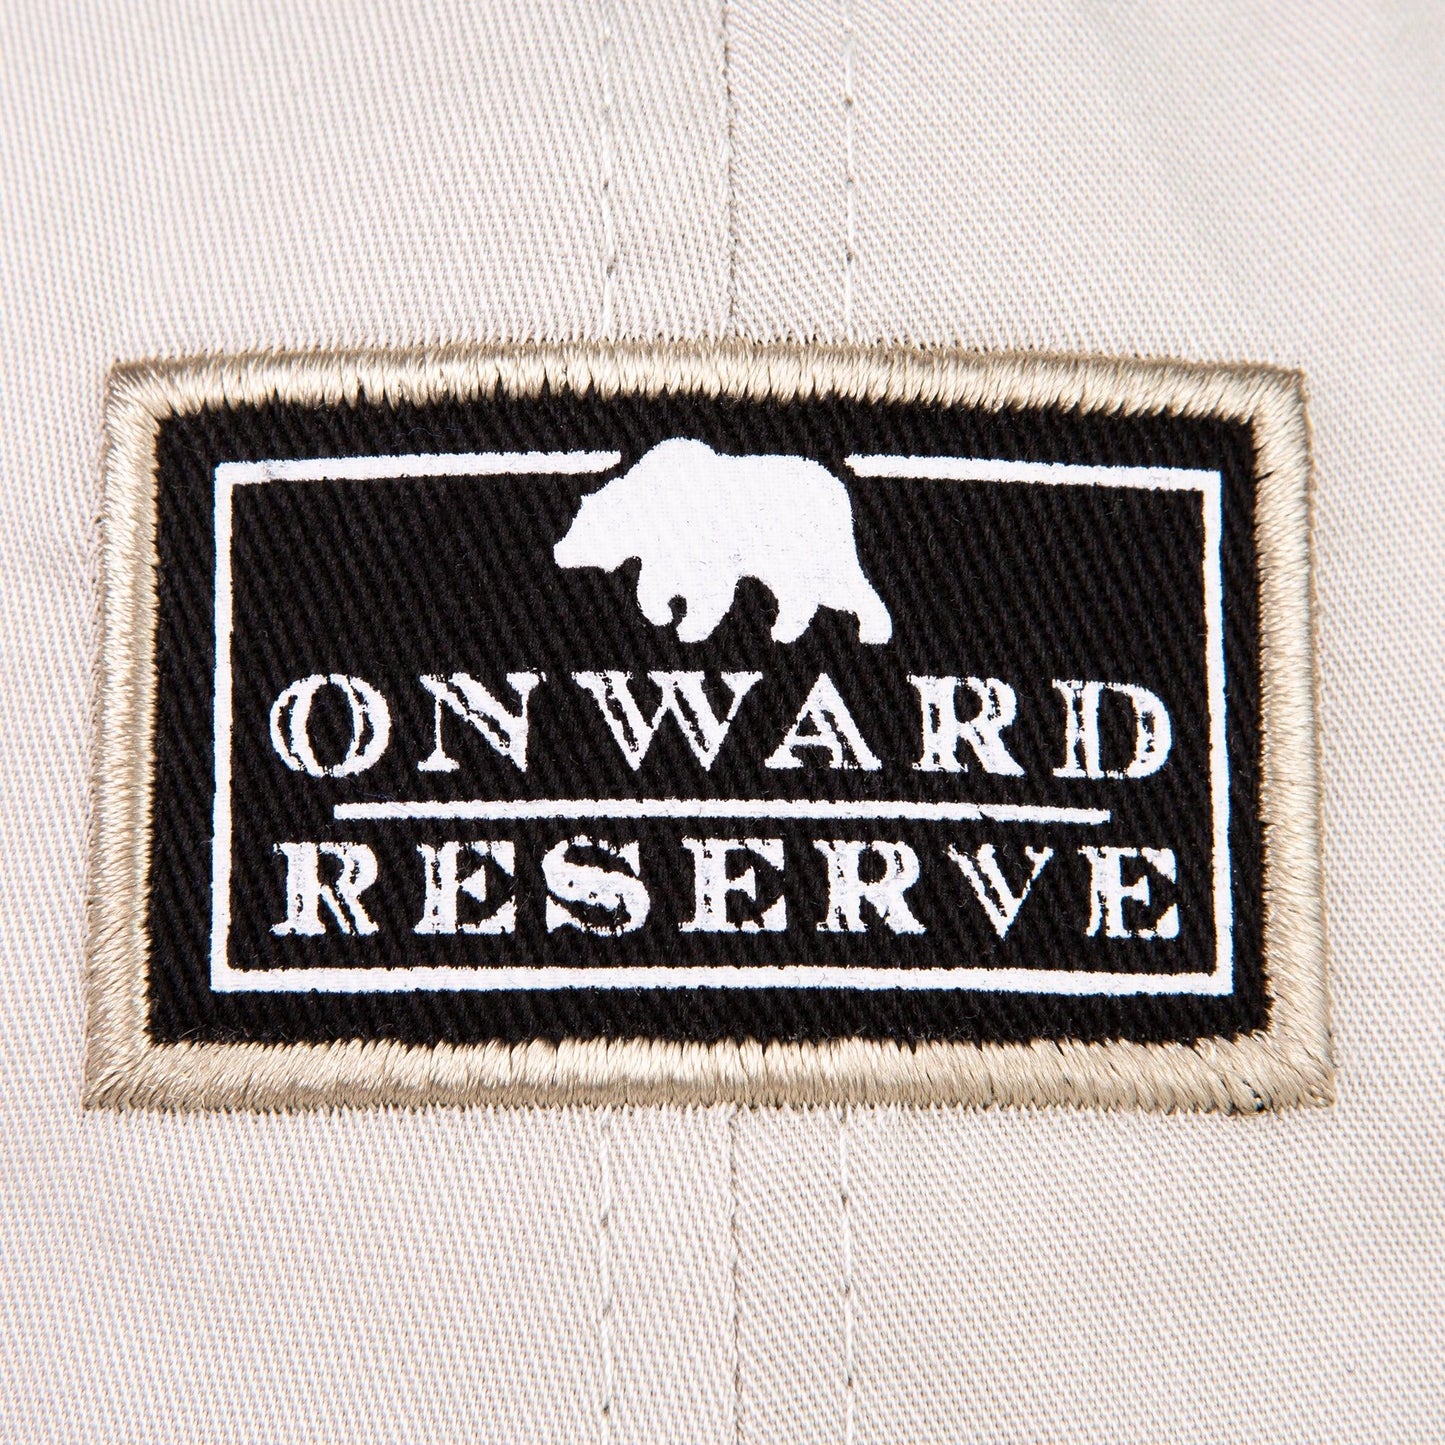 Stamp Logo Lightweight Cotton Hat - OnwardReserve